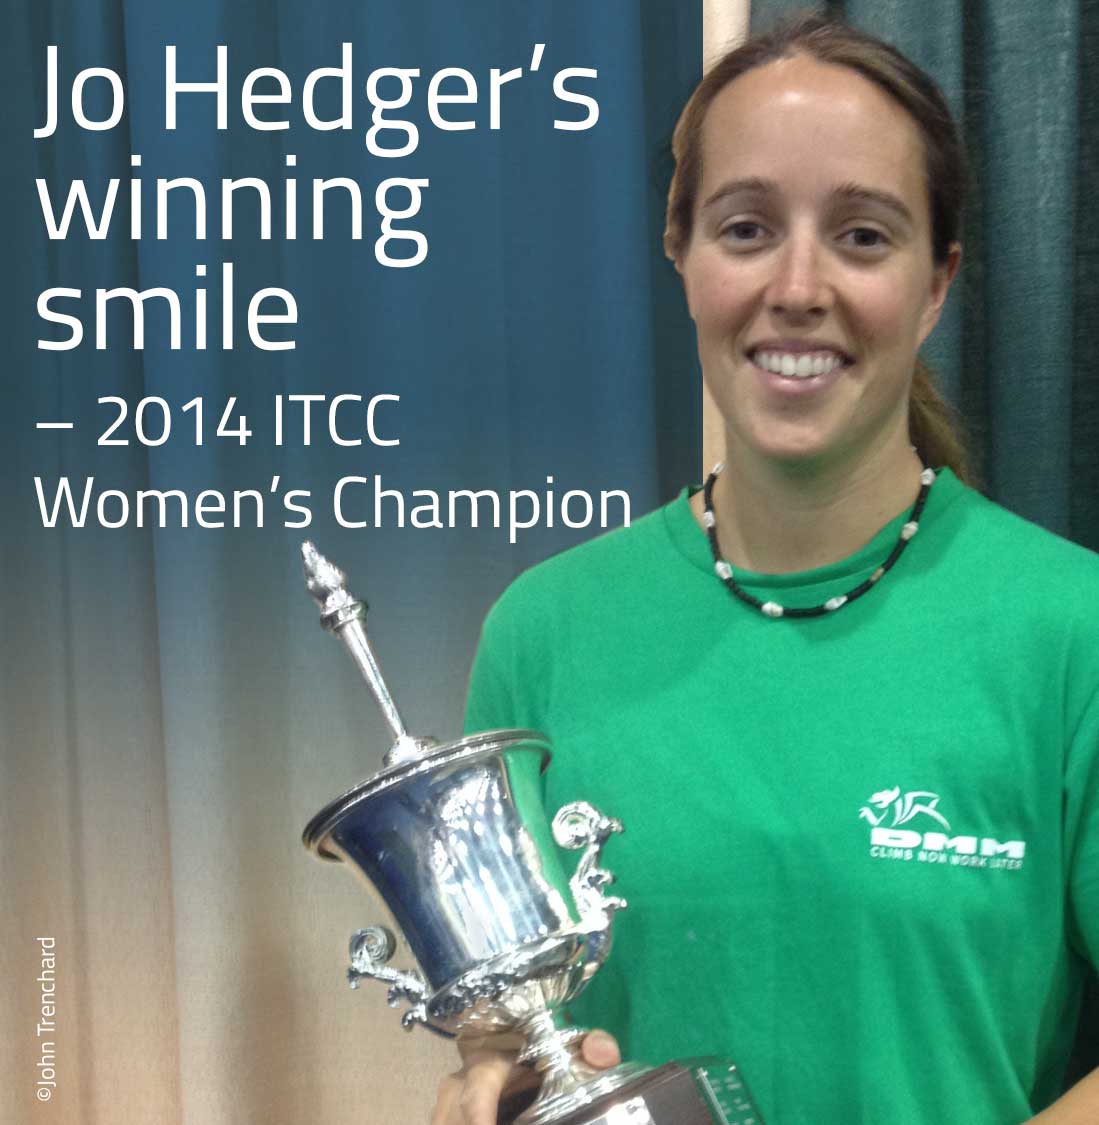 Jo Hedger's winning smile - 2014 ITCC Women's Champion. (John Trenchard)